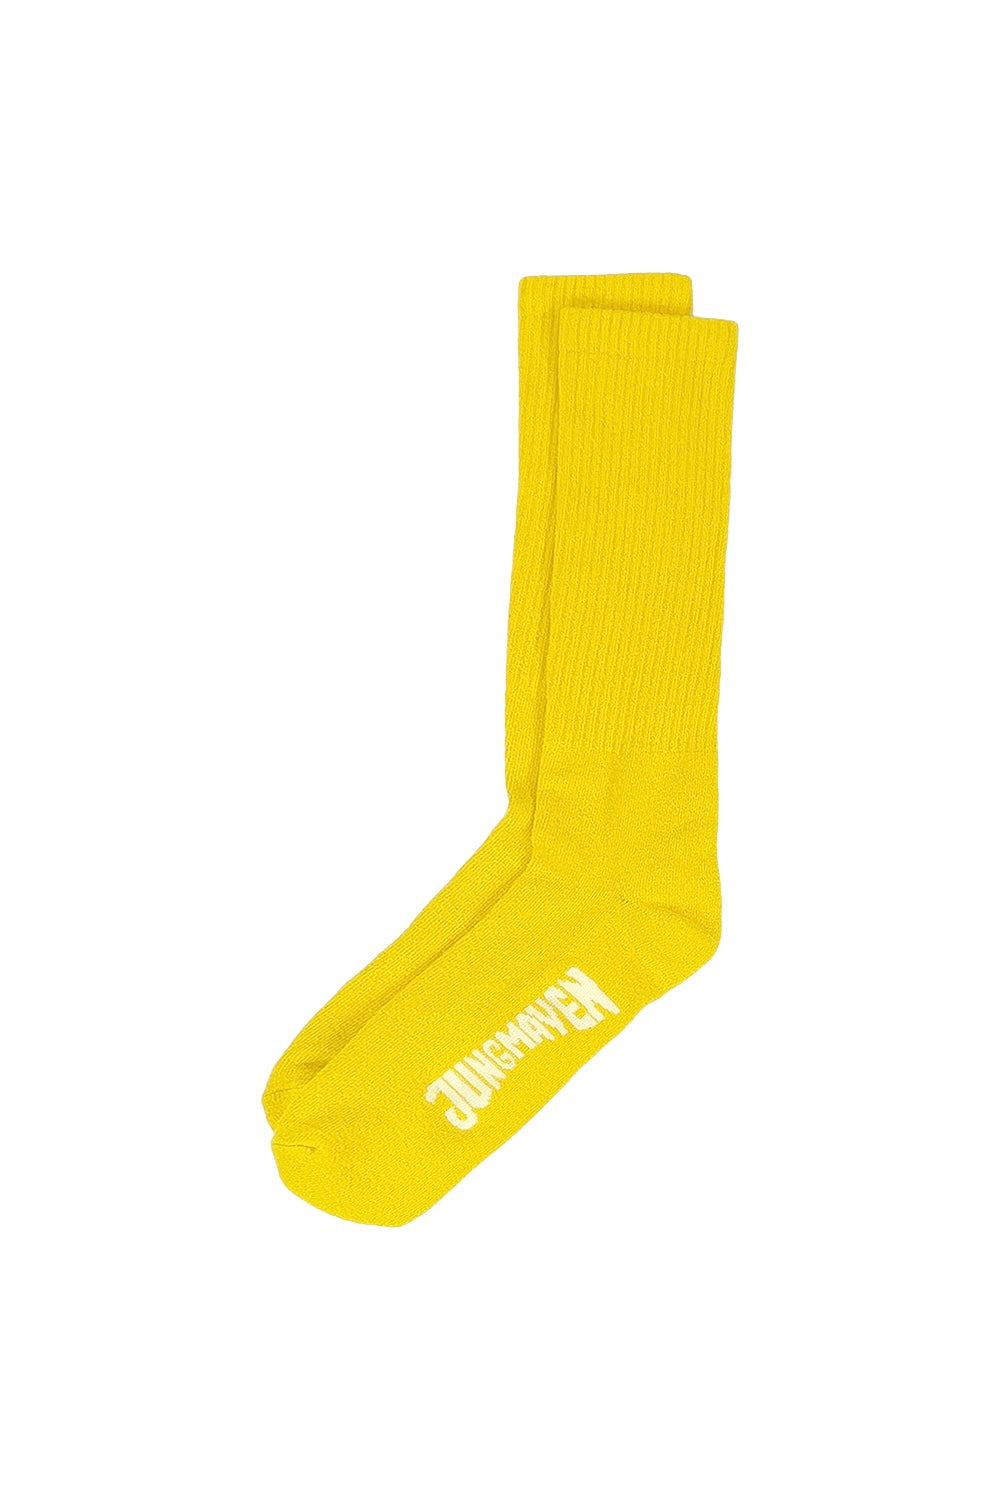 Hemp Crew Socks | Jungmaven Hemp Clothing & Accessories / Color: Sunshine Yellow